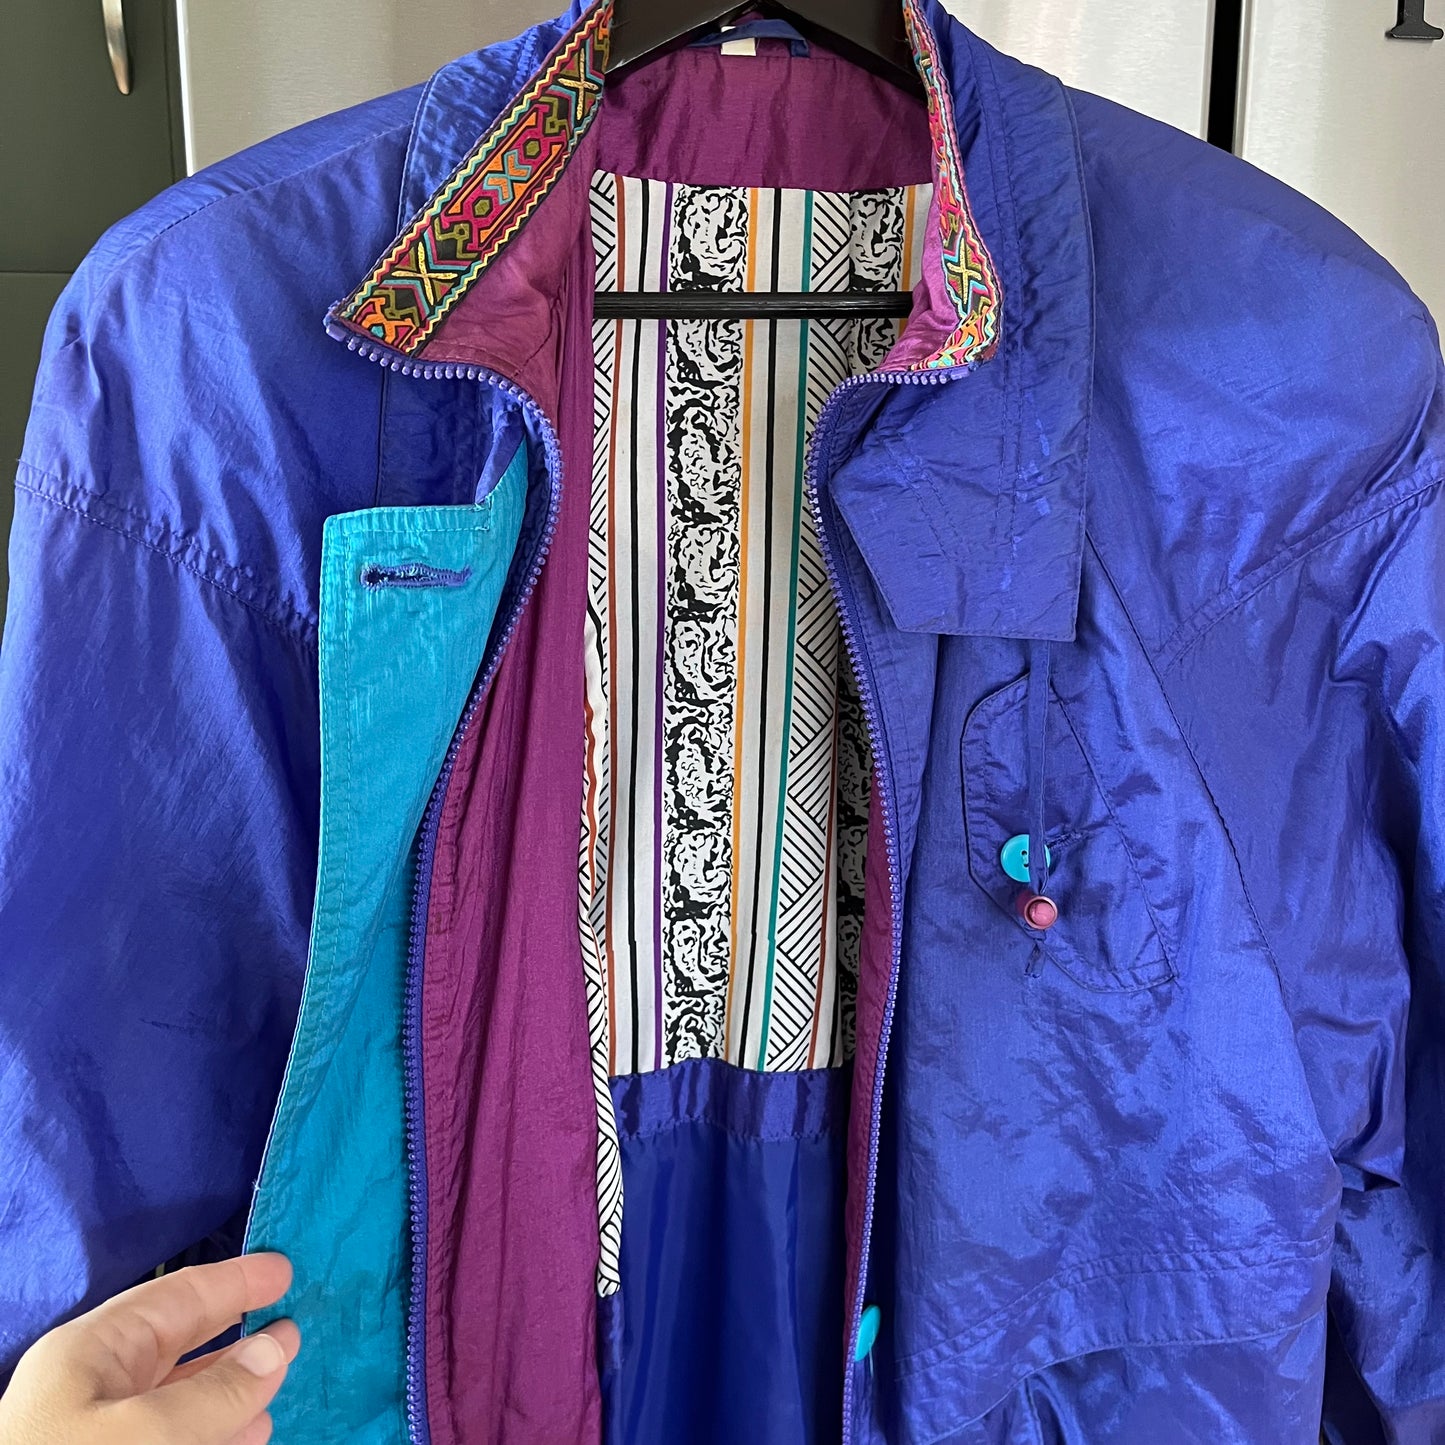 Vintage 80s Rue Grenelle Iridescent Purple Trench / Rain Coat